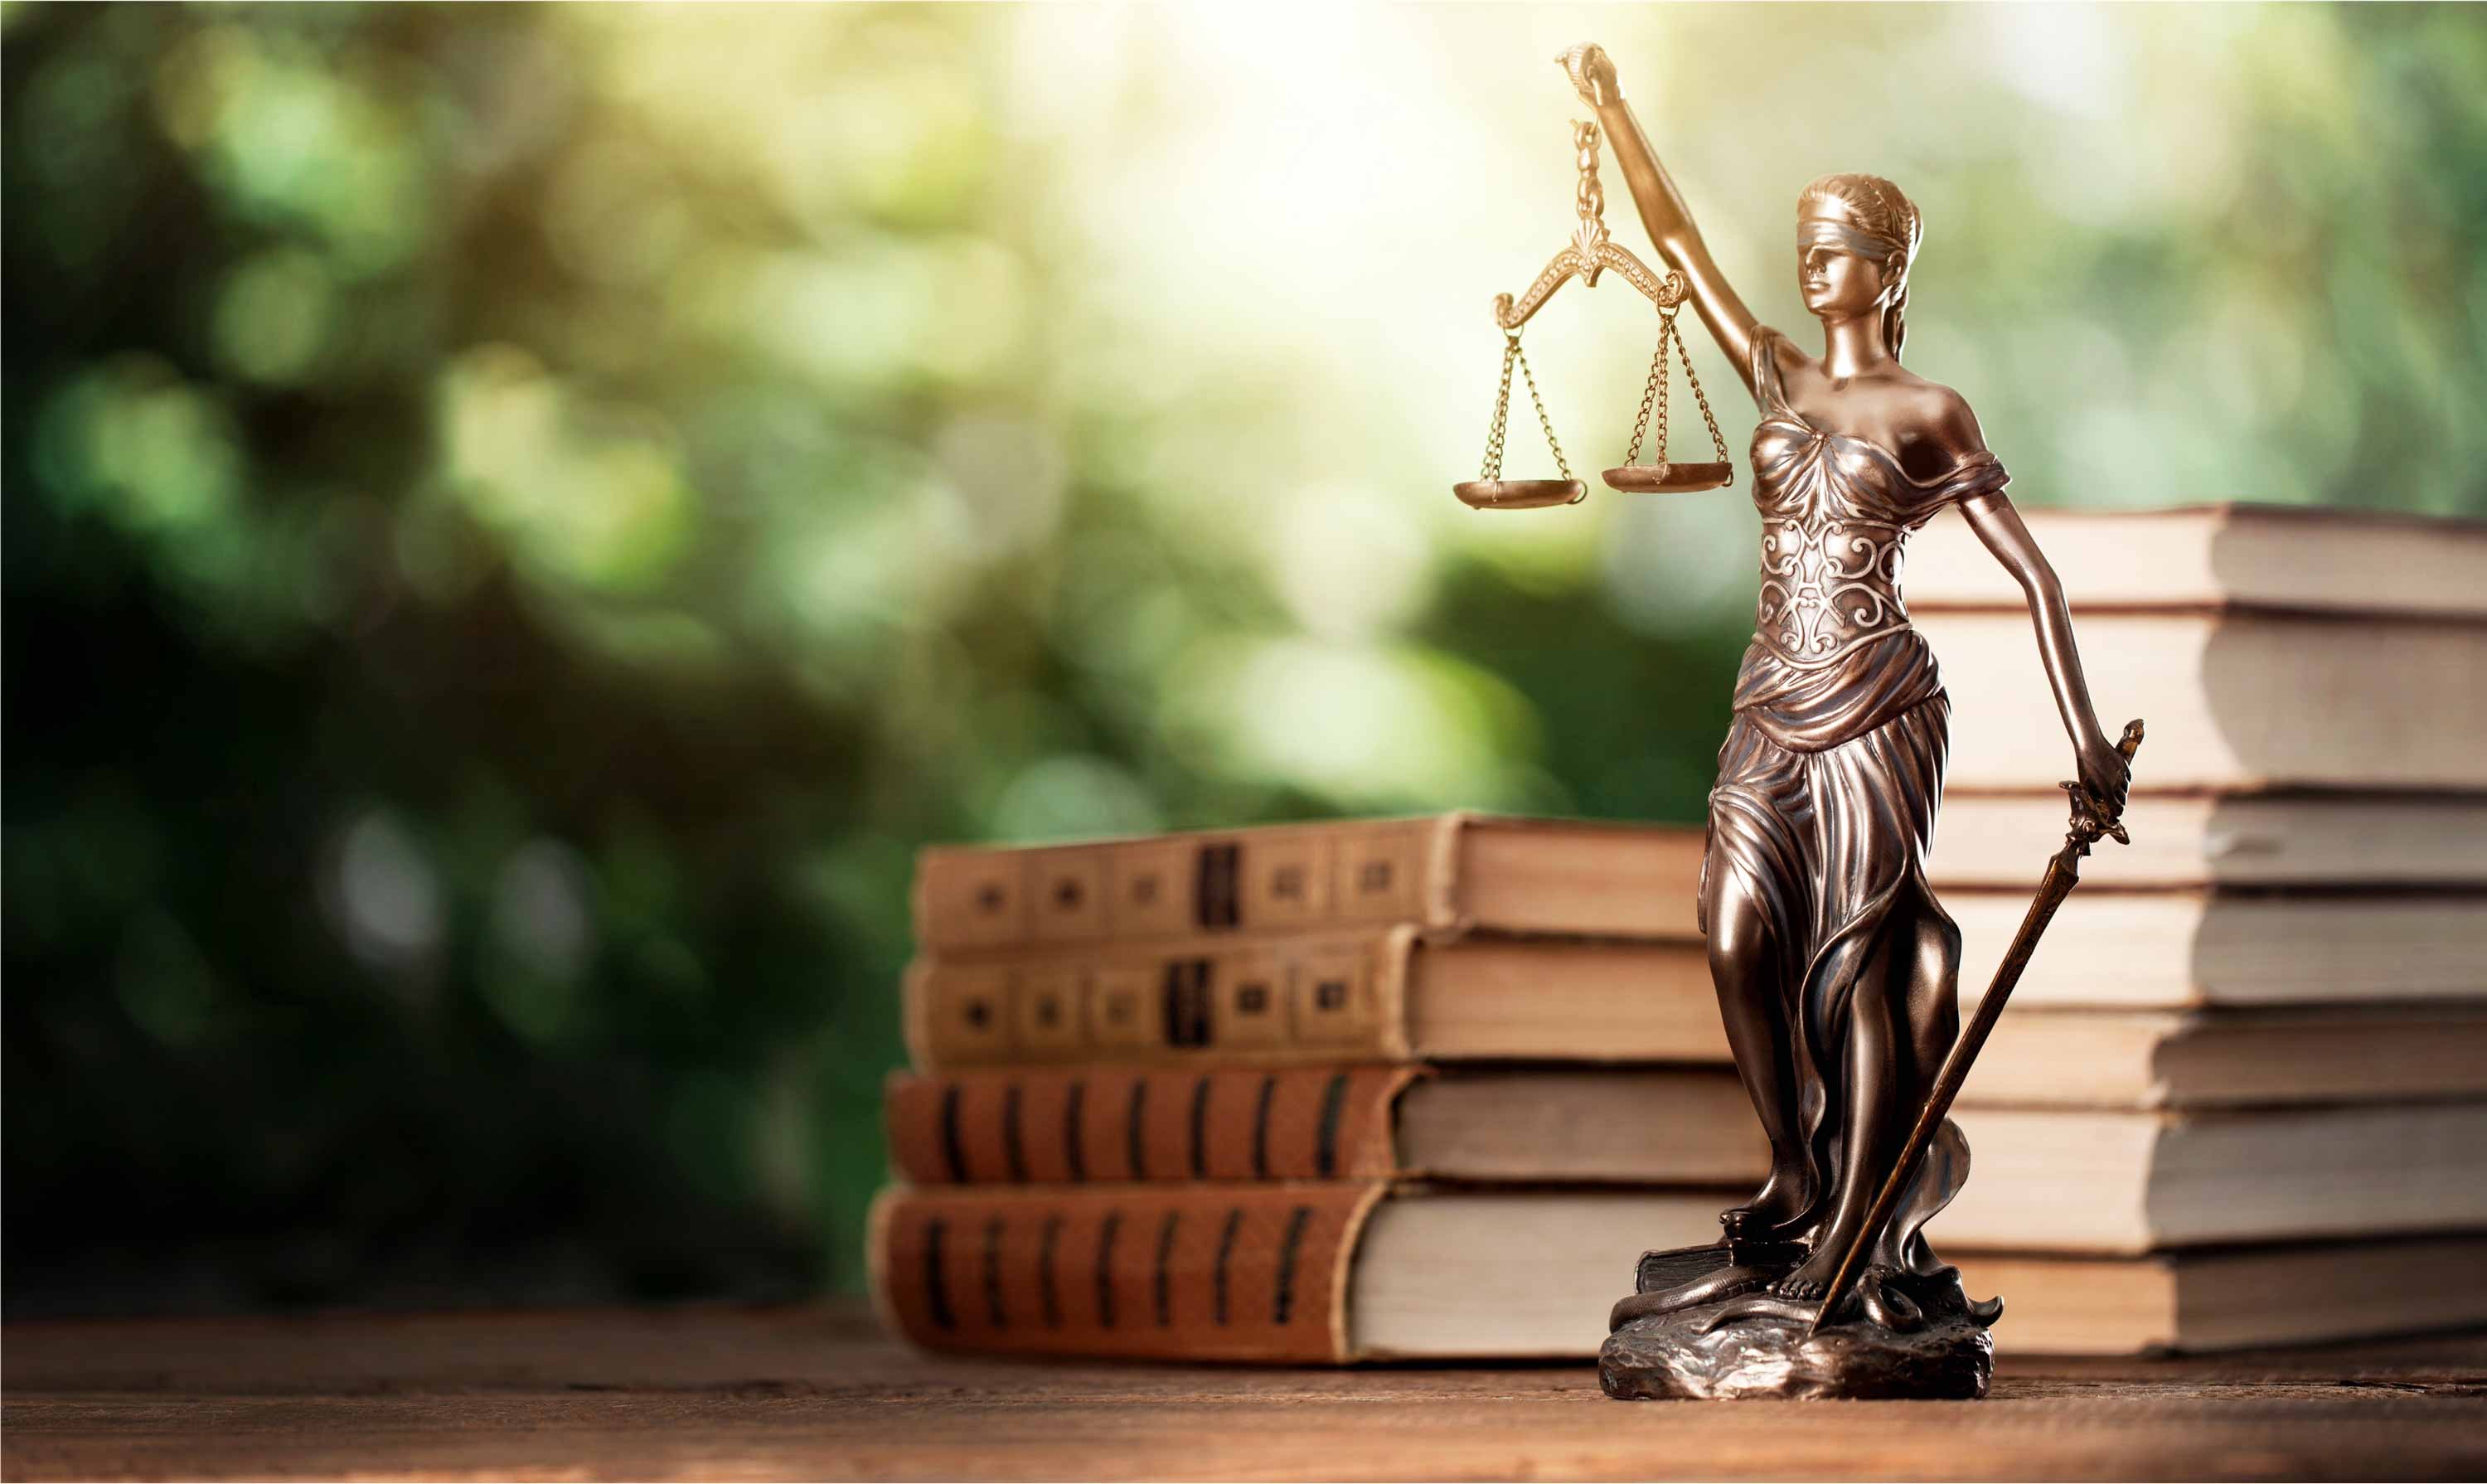 justice figurine on desk with books